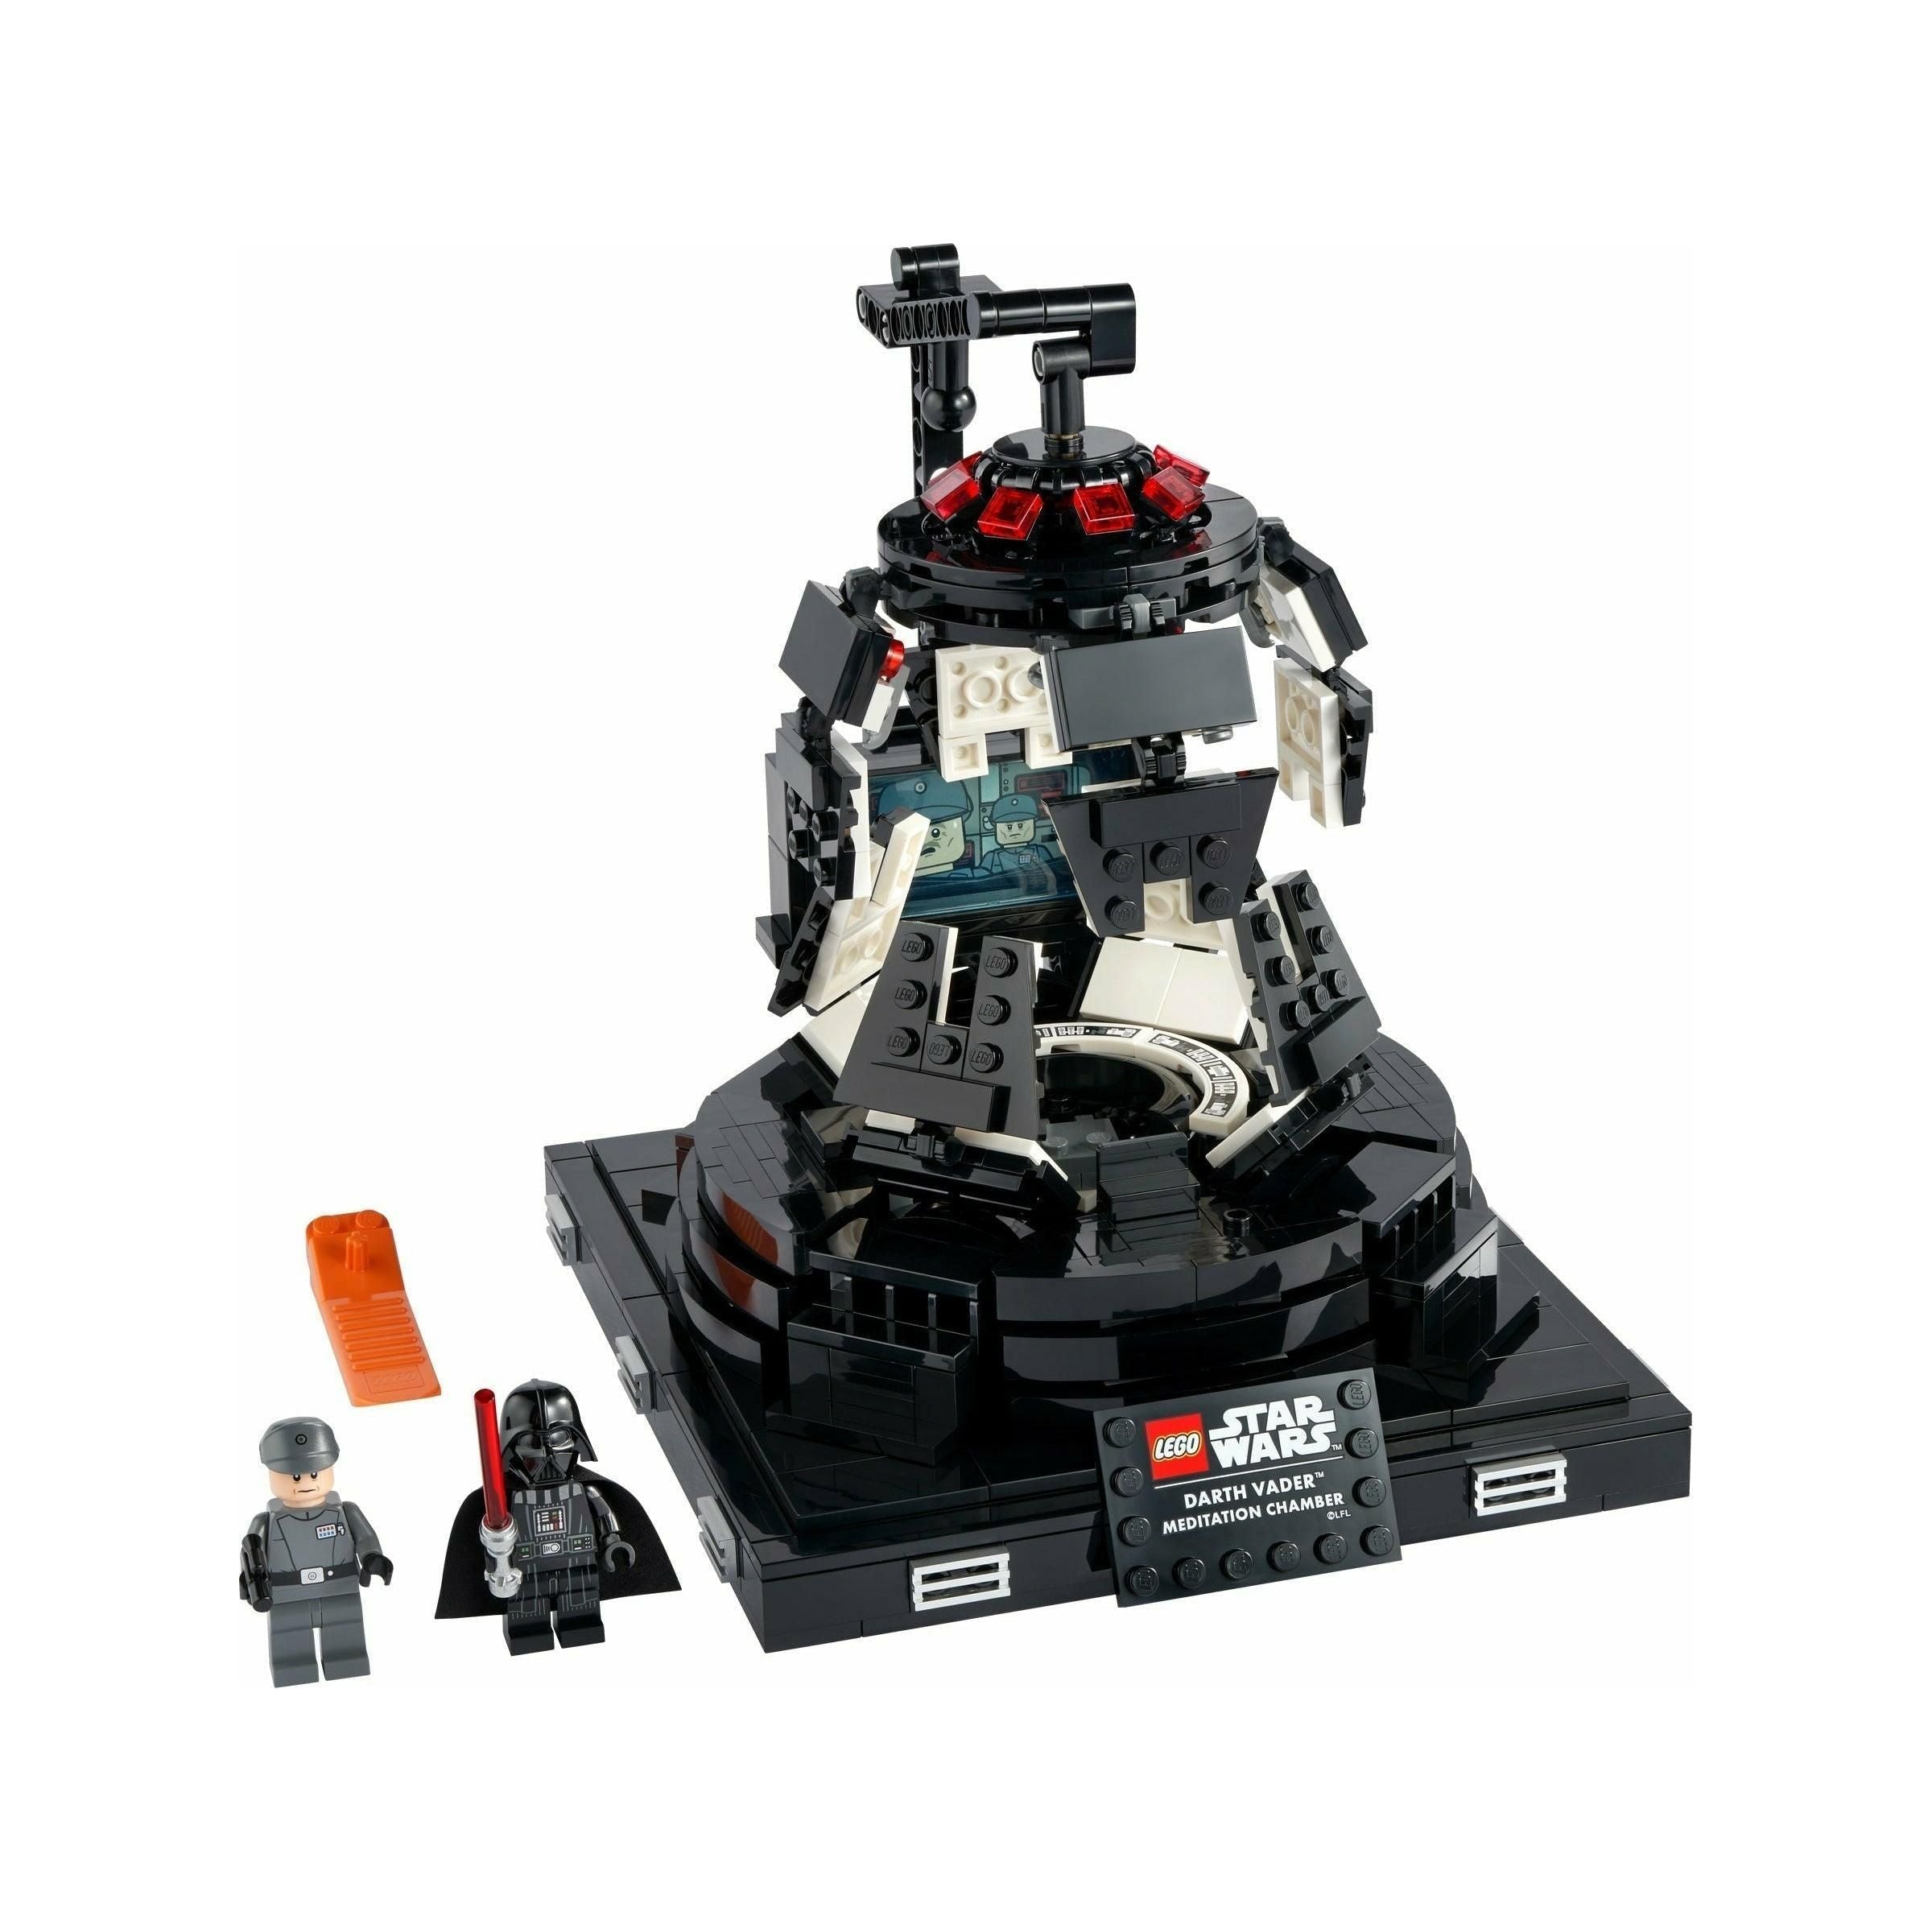 LEGO 75296 Star Wars Darth Vader Meditation Chamber Building Kit (663 Pieces) - BumbleToys - 18+, Boys, Darth Vader, LEGO, OXE, Pre-Order, star wars